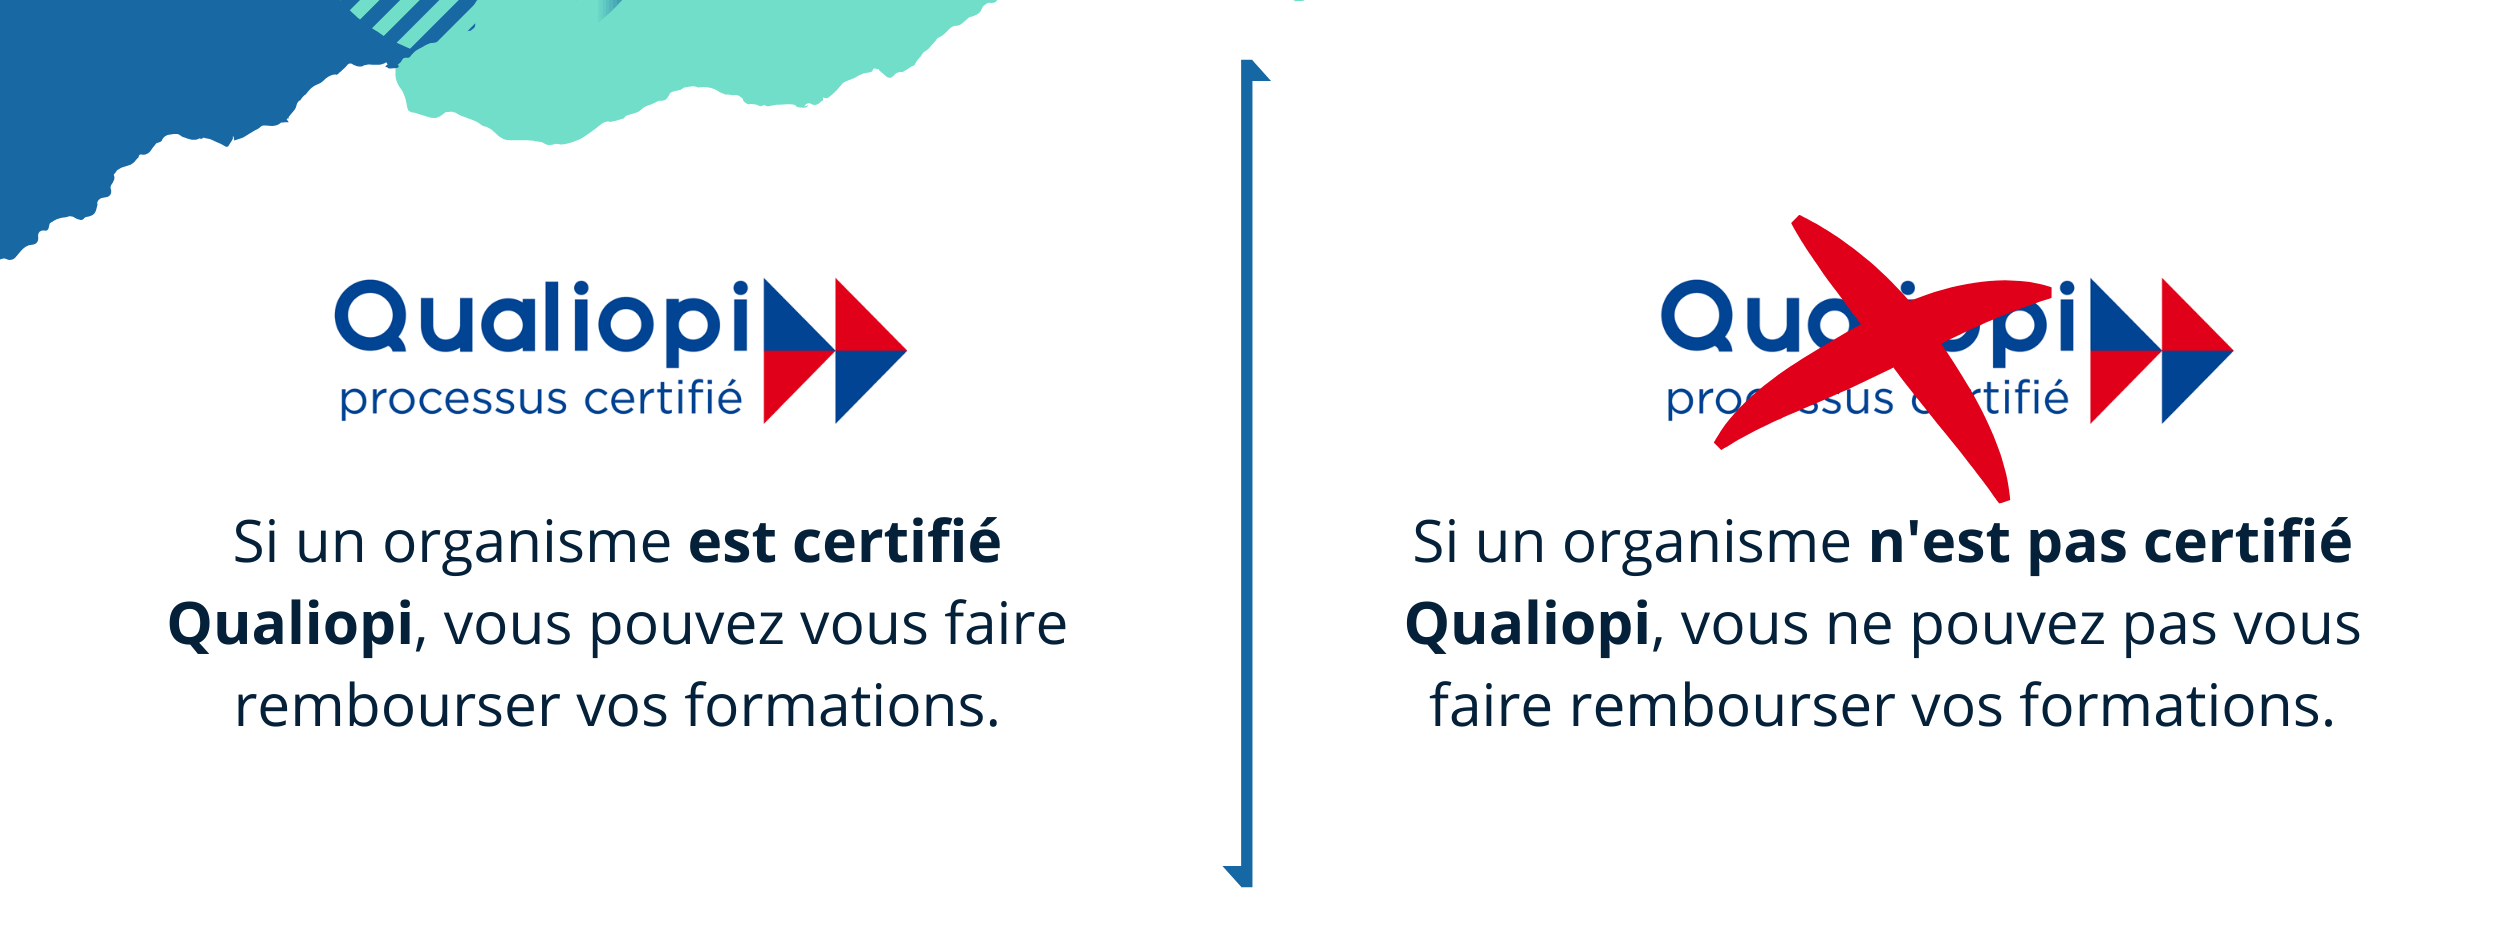 Certification Qualiopi 1 - Start Learning